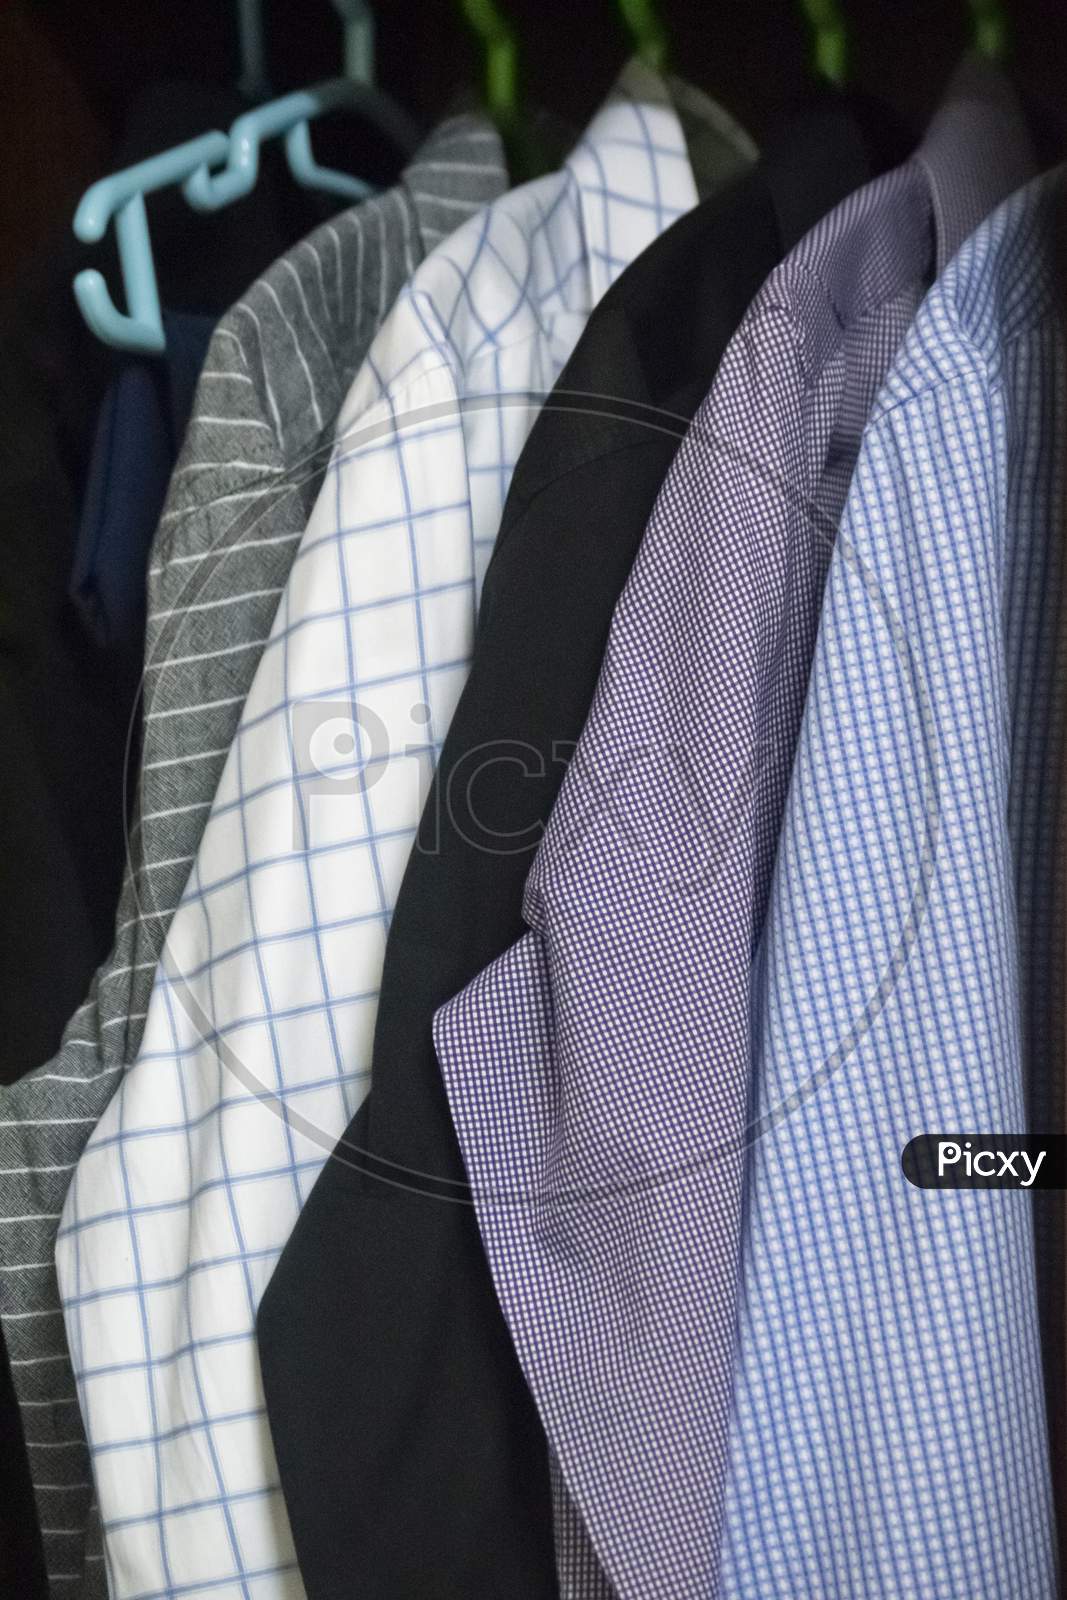 Mix Of Men'S Shirts Hanged In Wardrobe